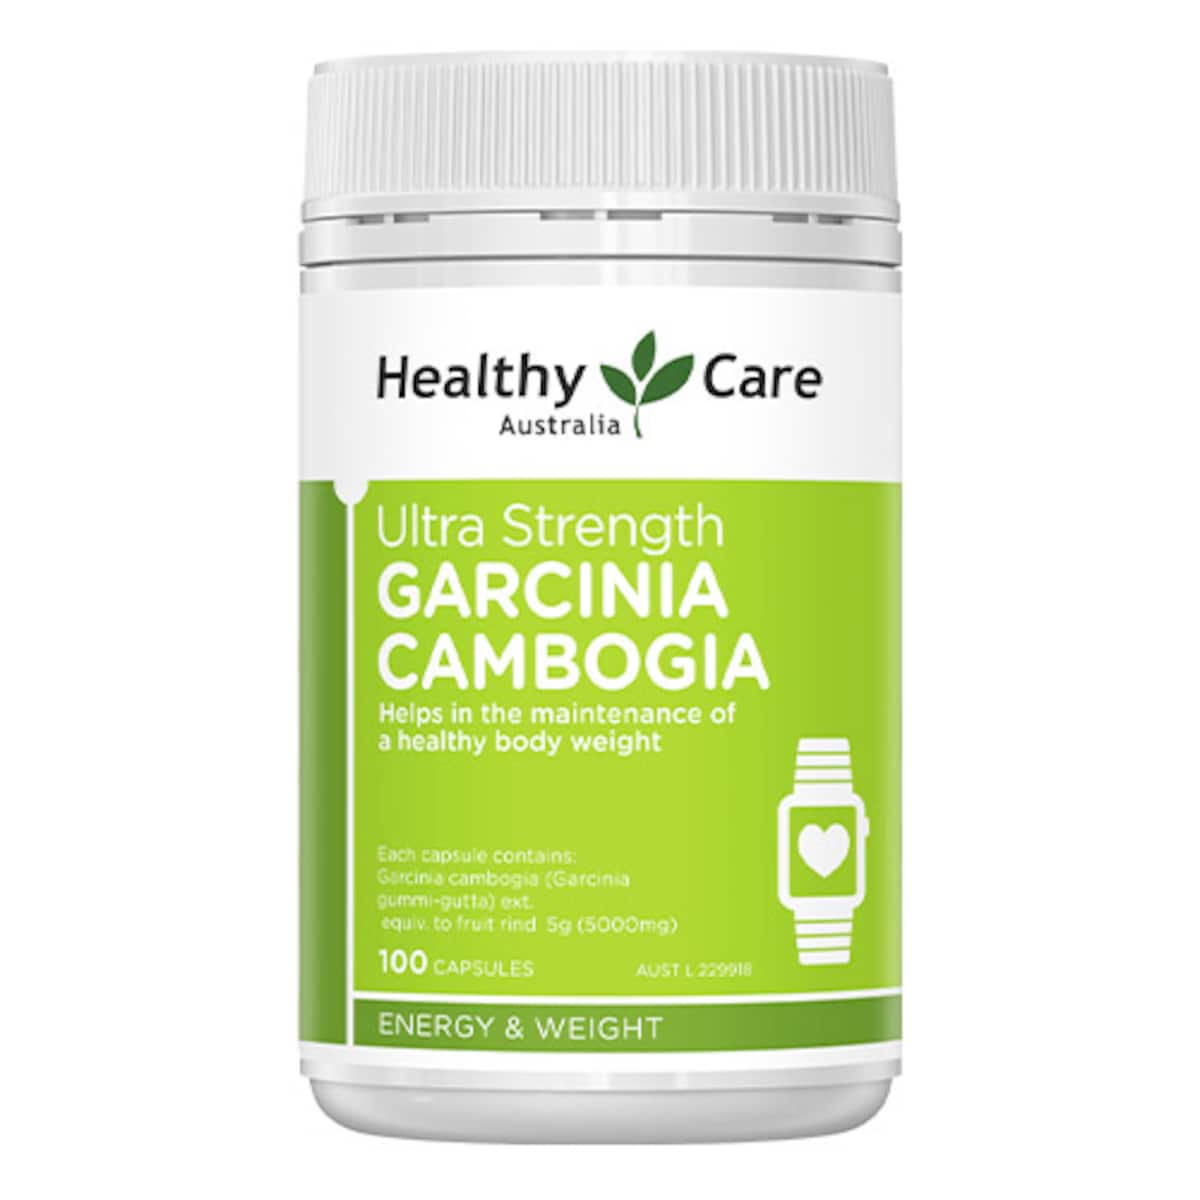 Healthy Care Ultra Strength Garcinia Cambogia 100 Capsules Australia